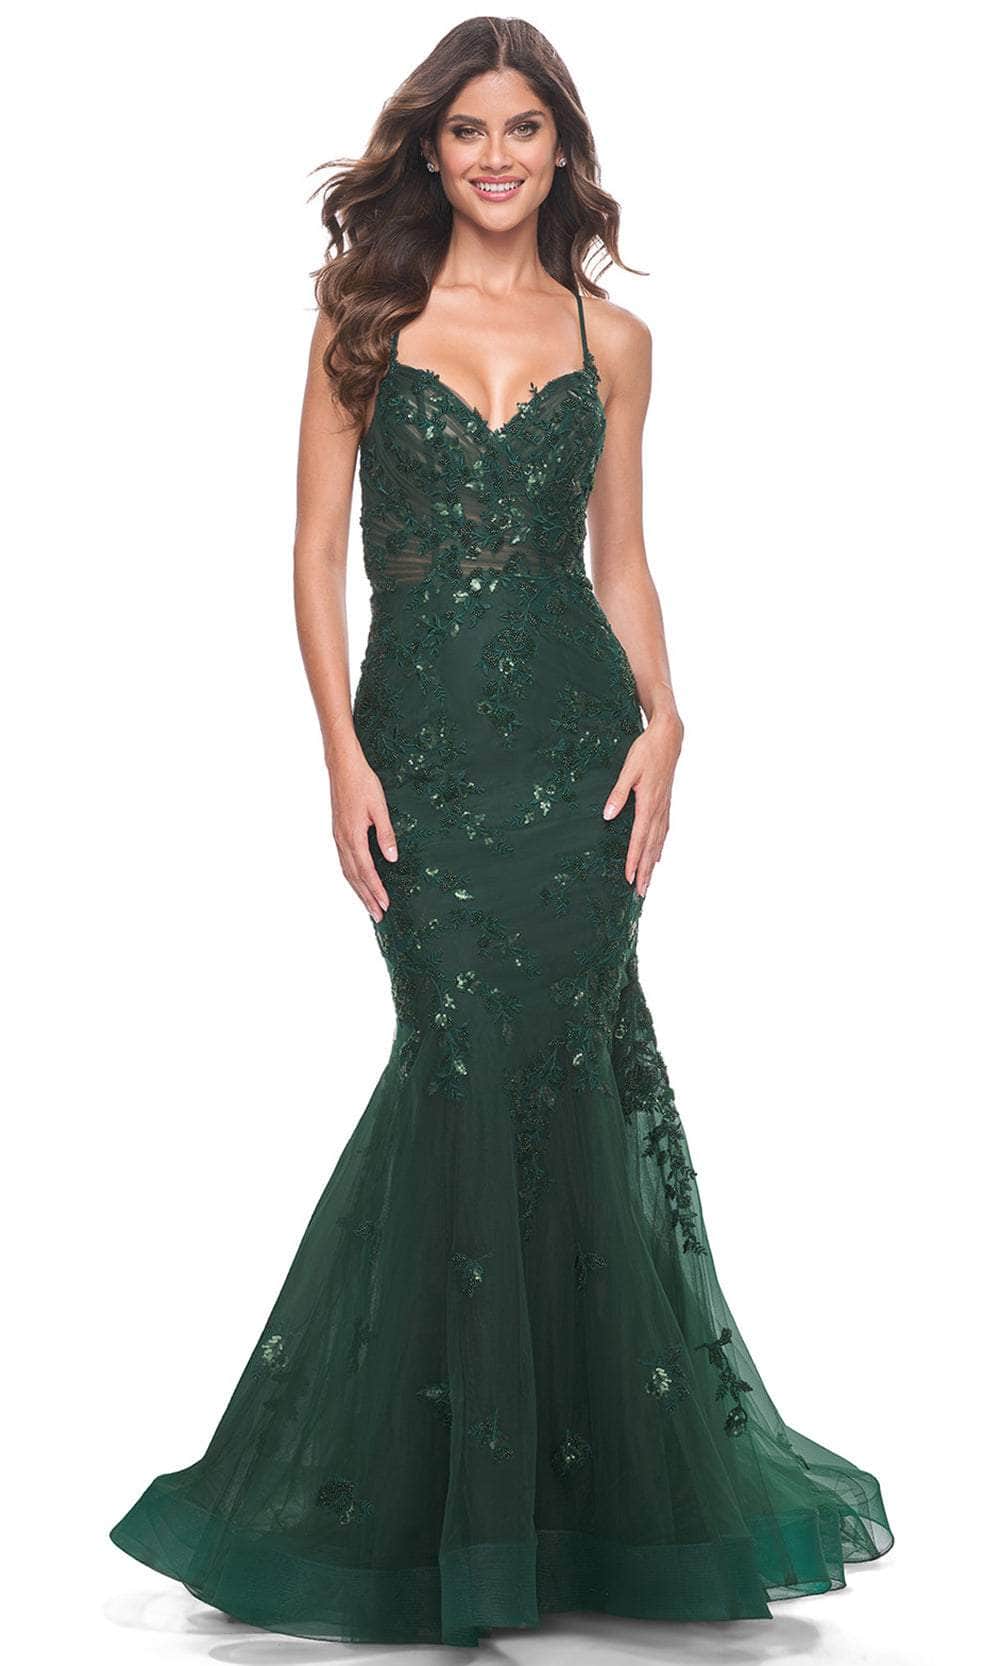 La Femme 32033 - Beaded Appliqued Mermaid Prom Dress
